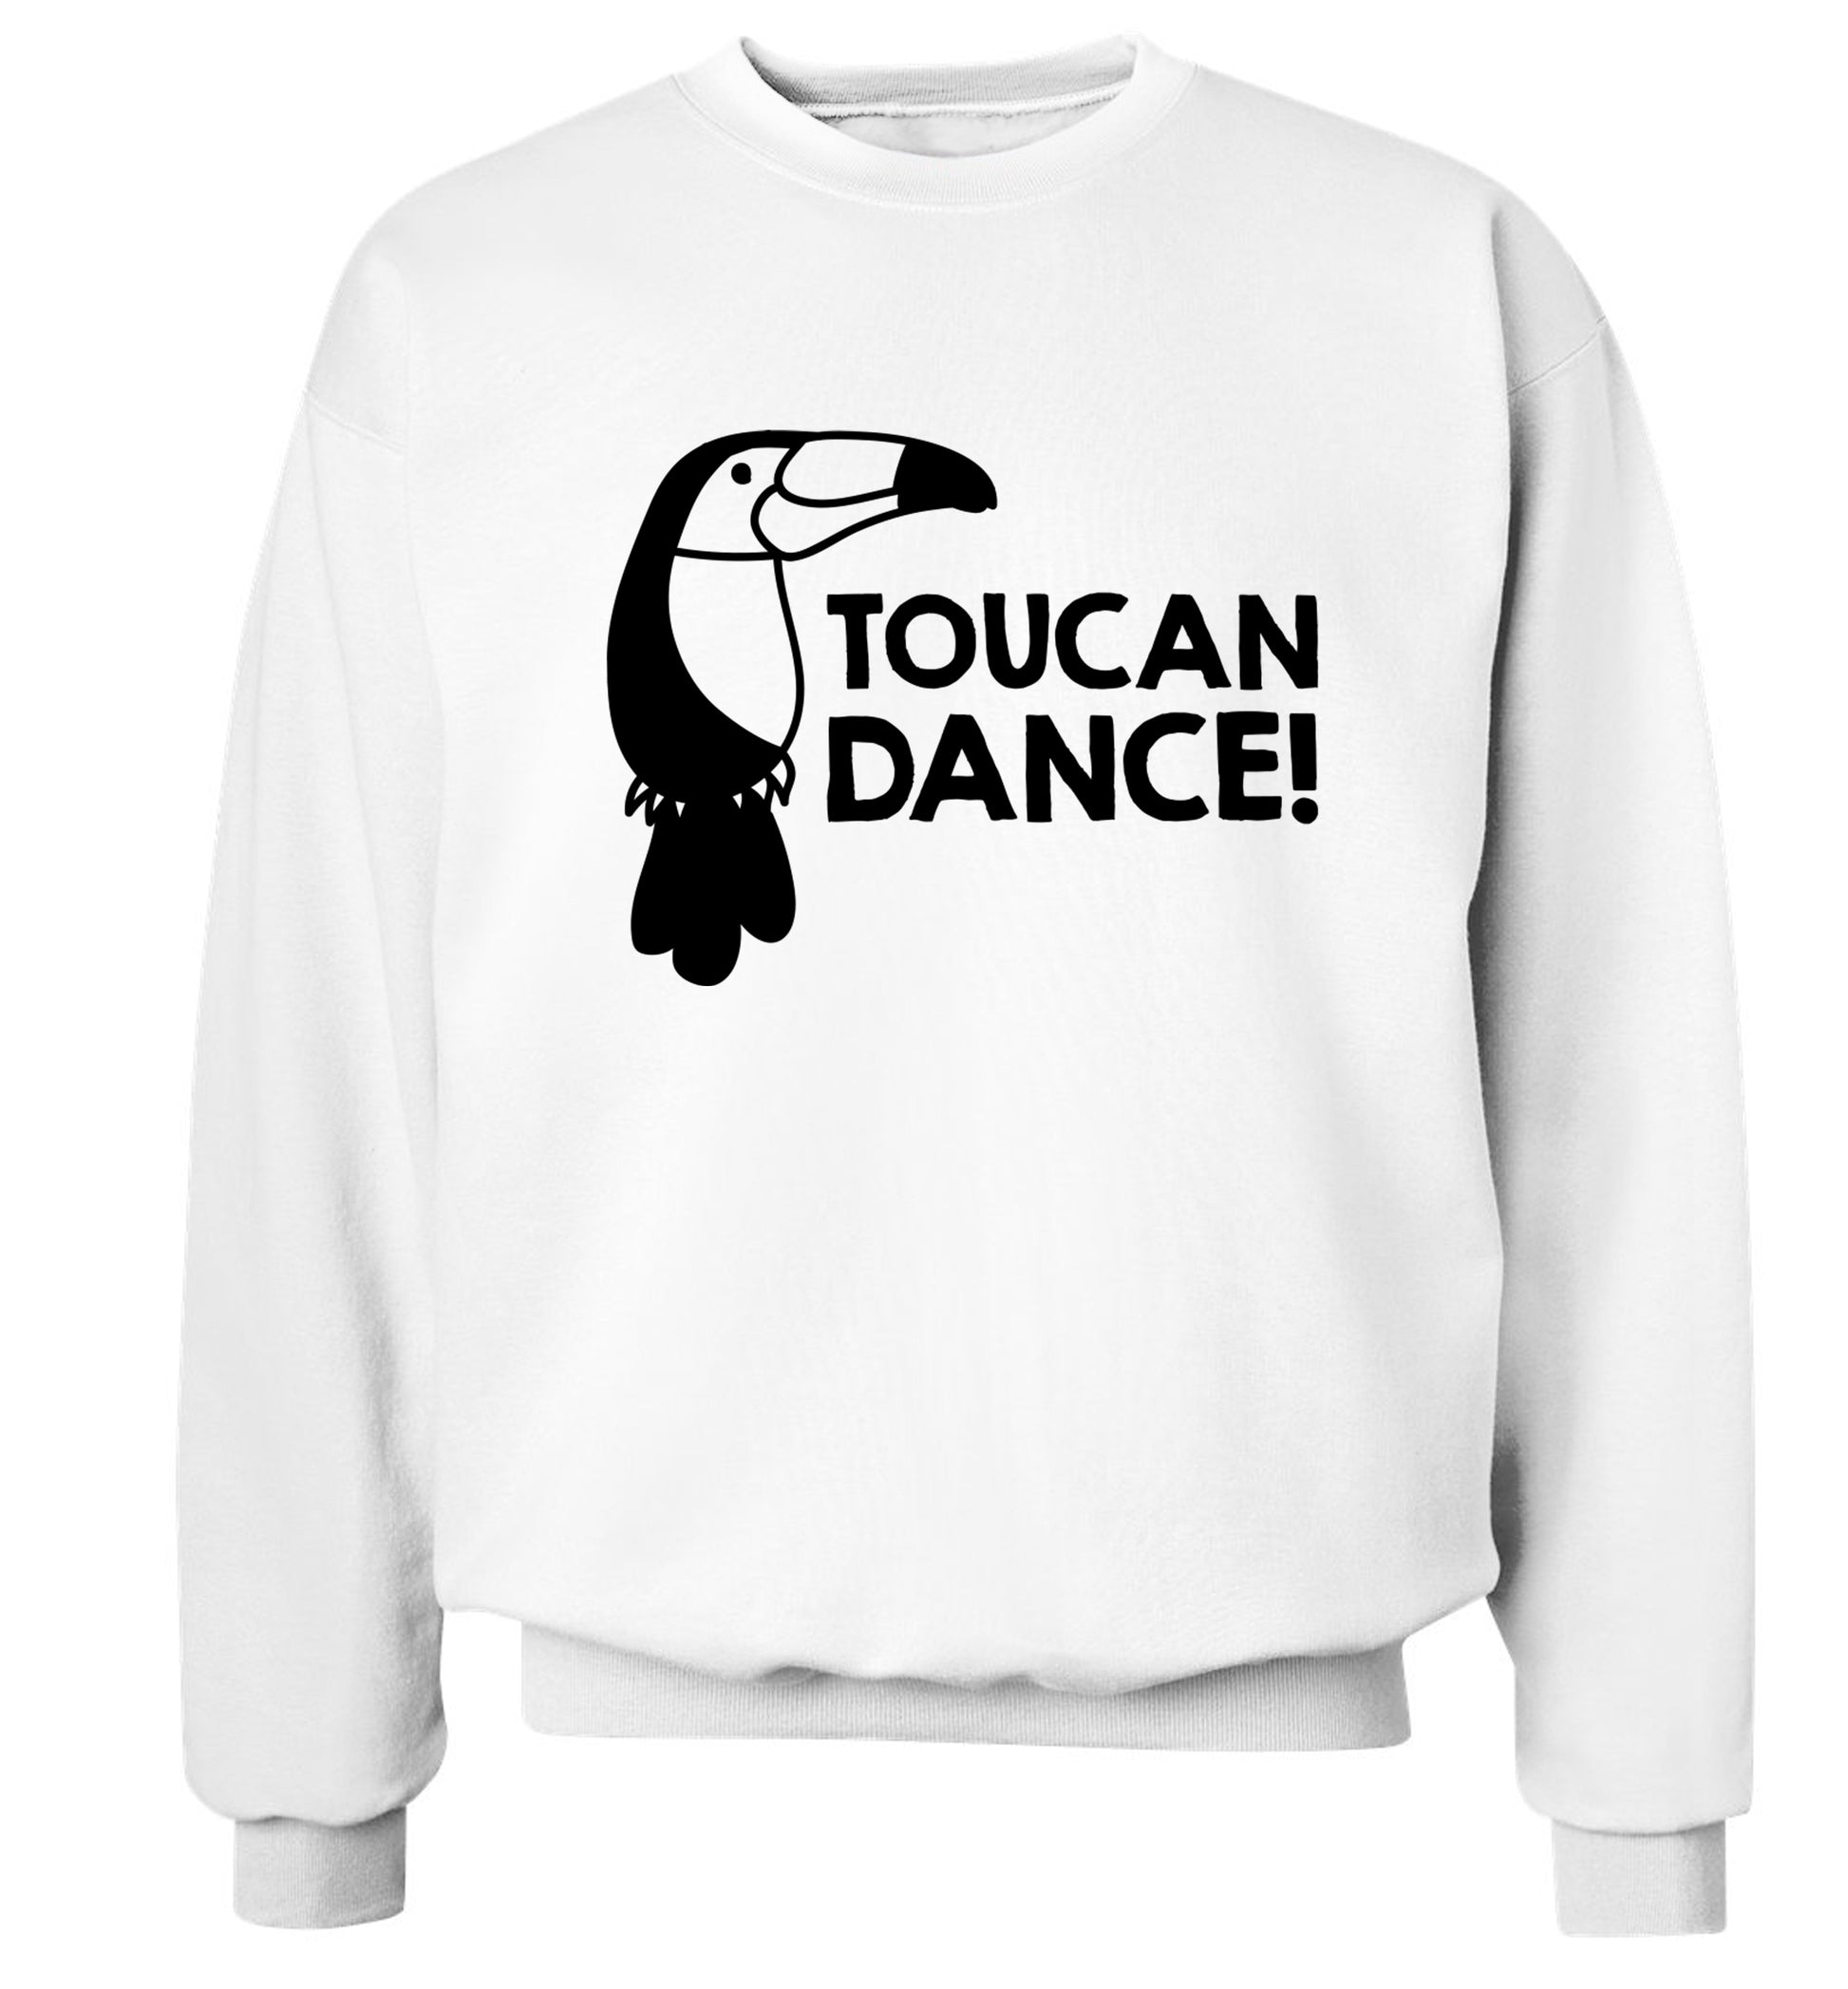 Toucan dance Adult's unisex white Sweater 2XL